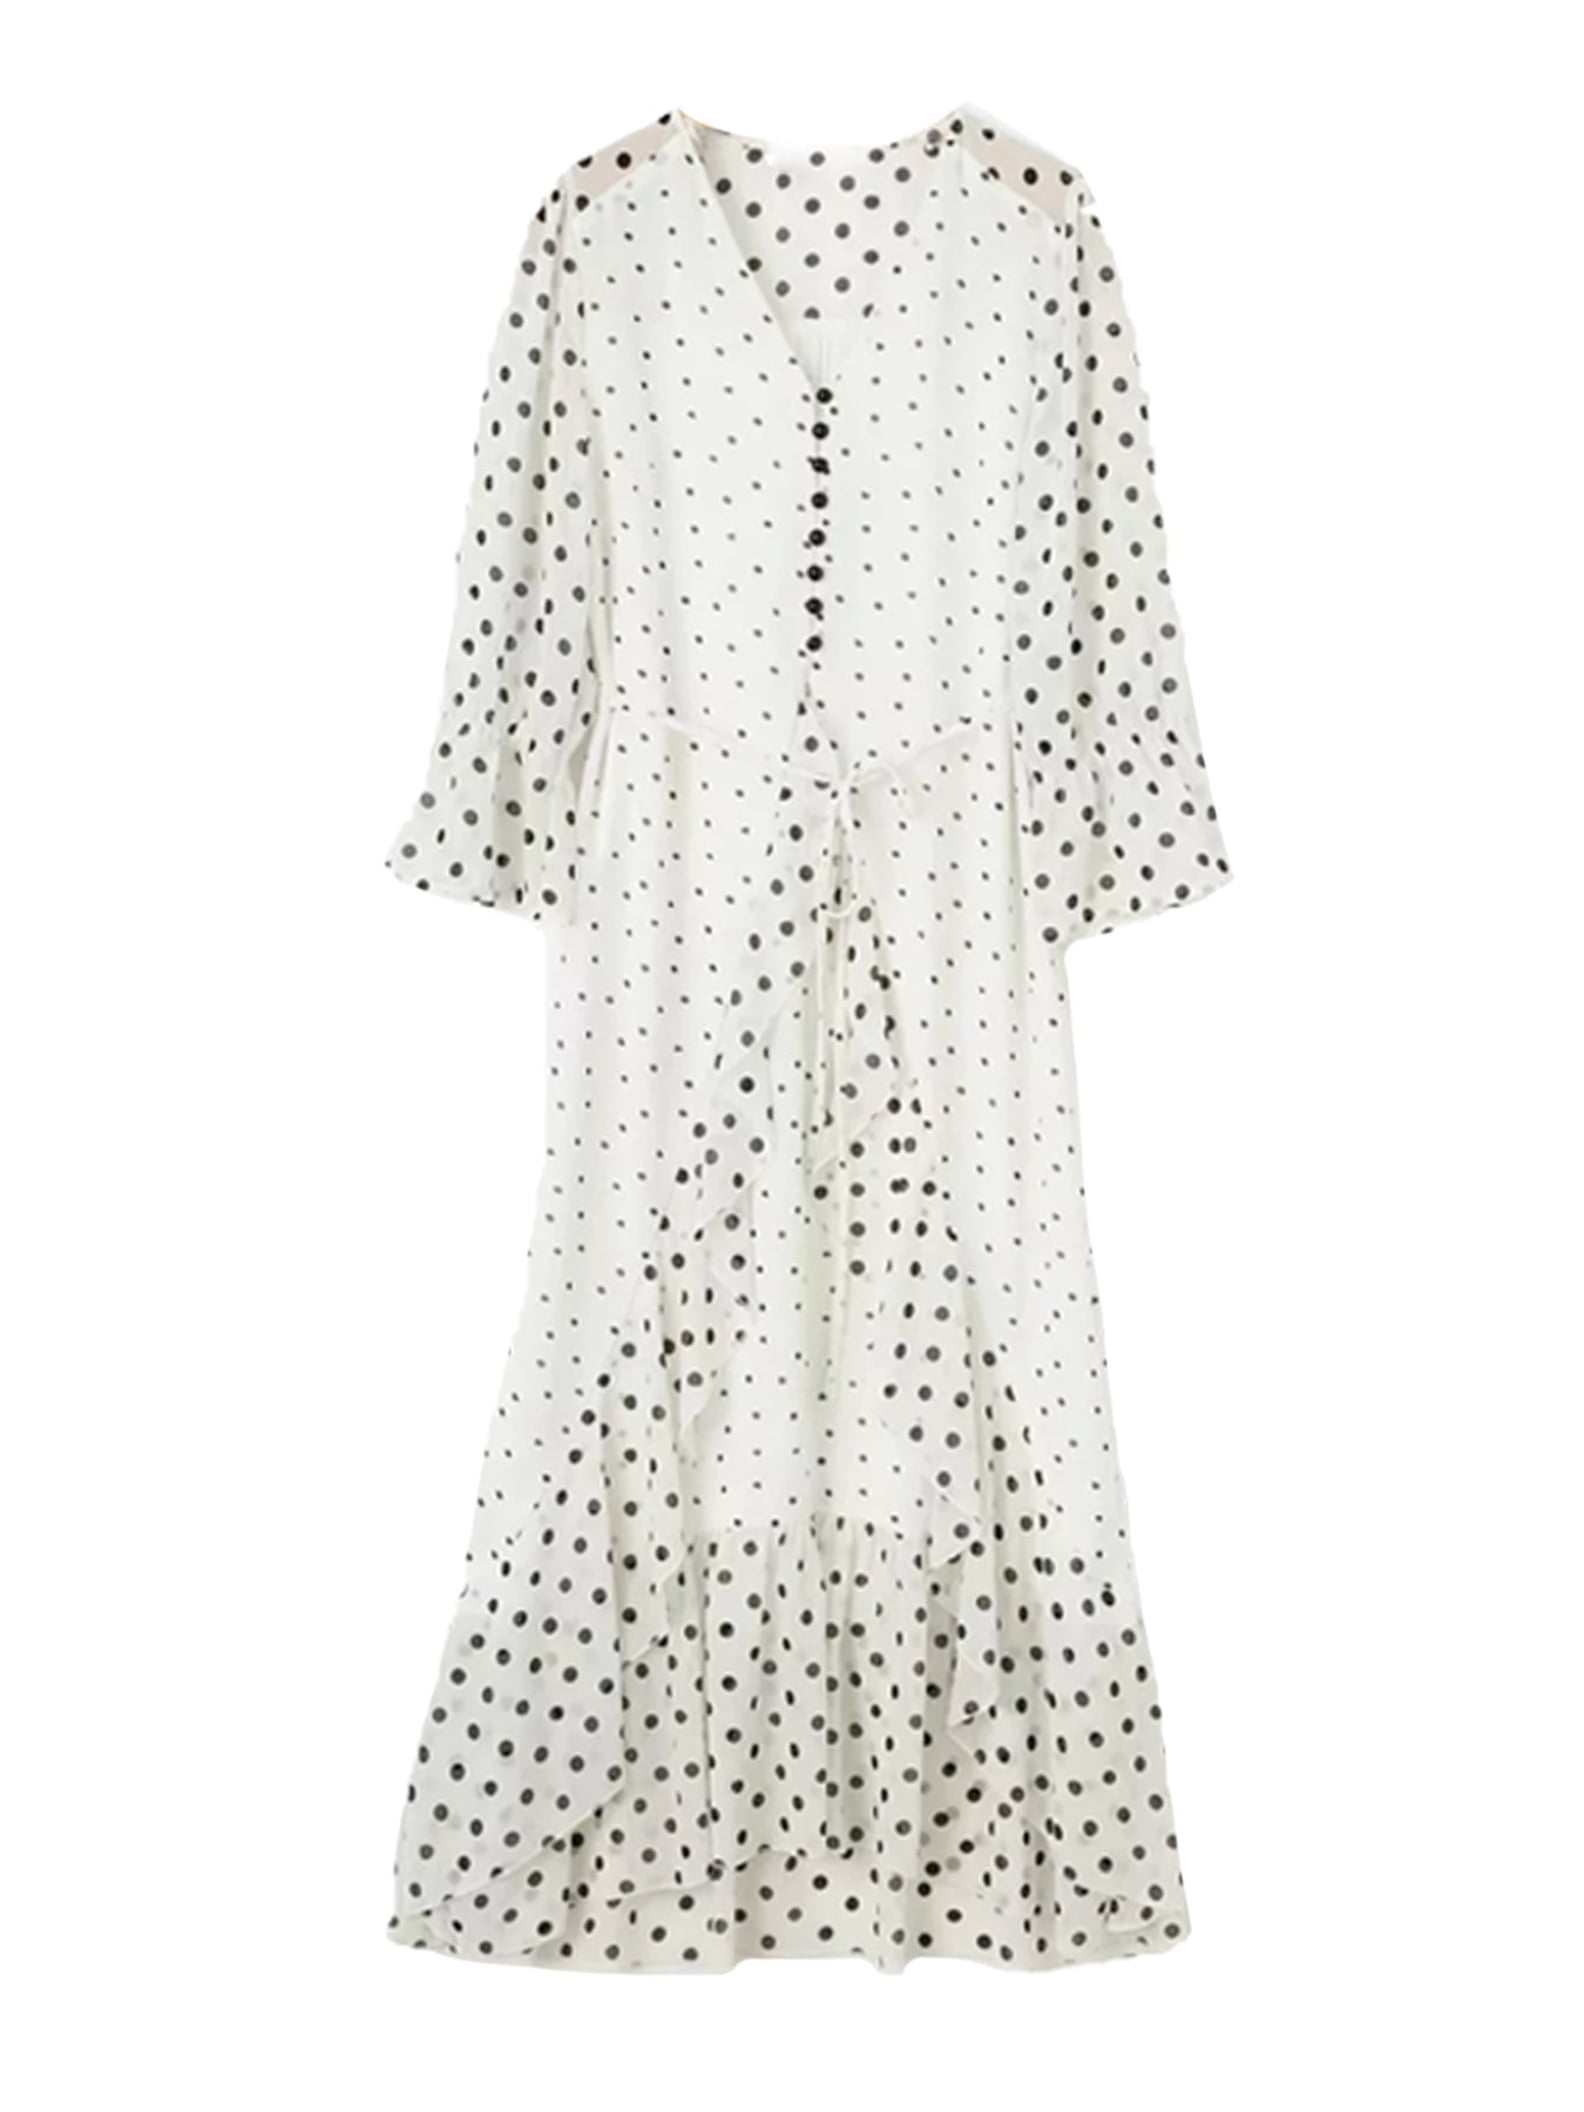 The Polka-Dot Dress From Zara That Went Totally Viral | POPSUGAR Fashion